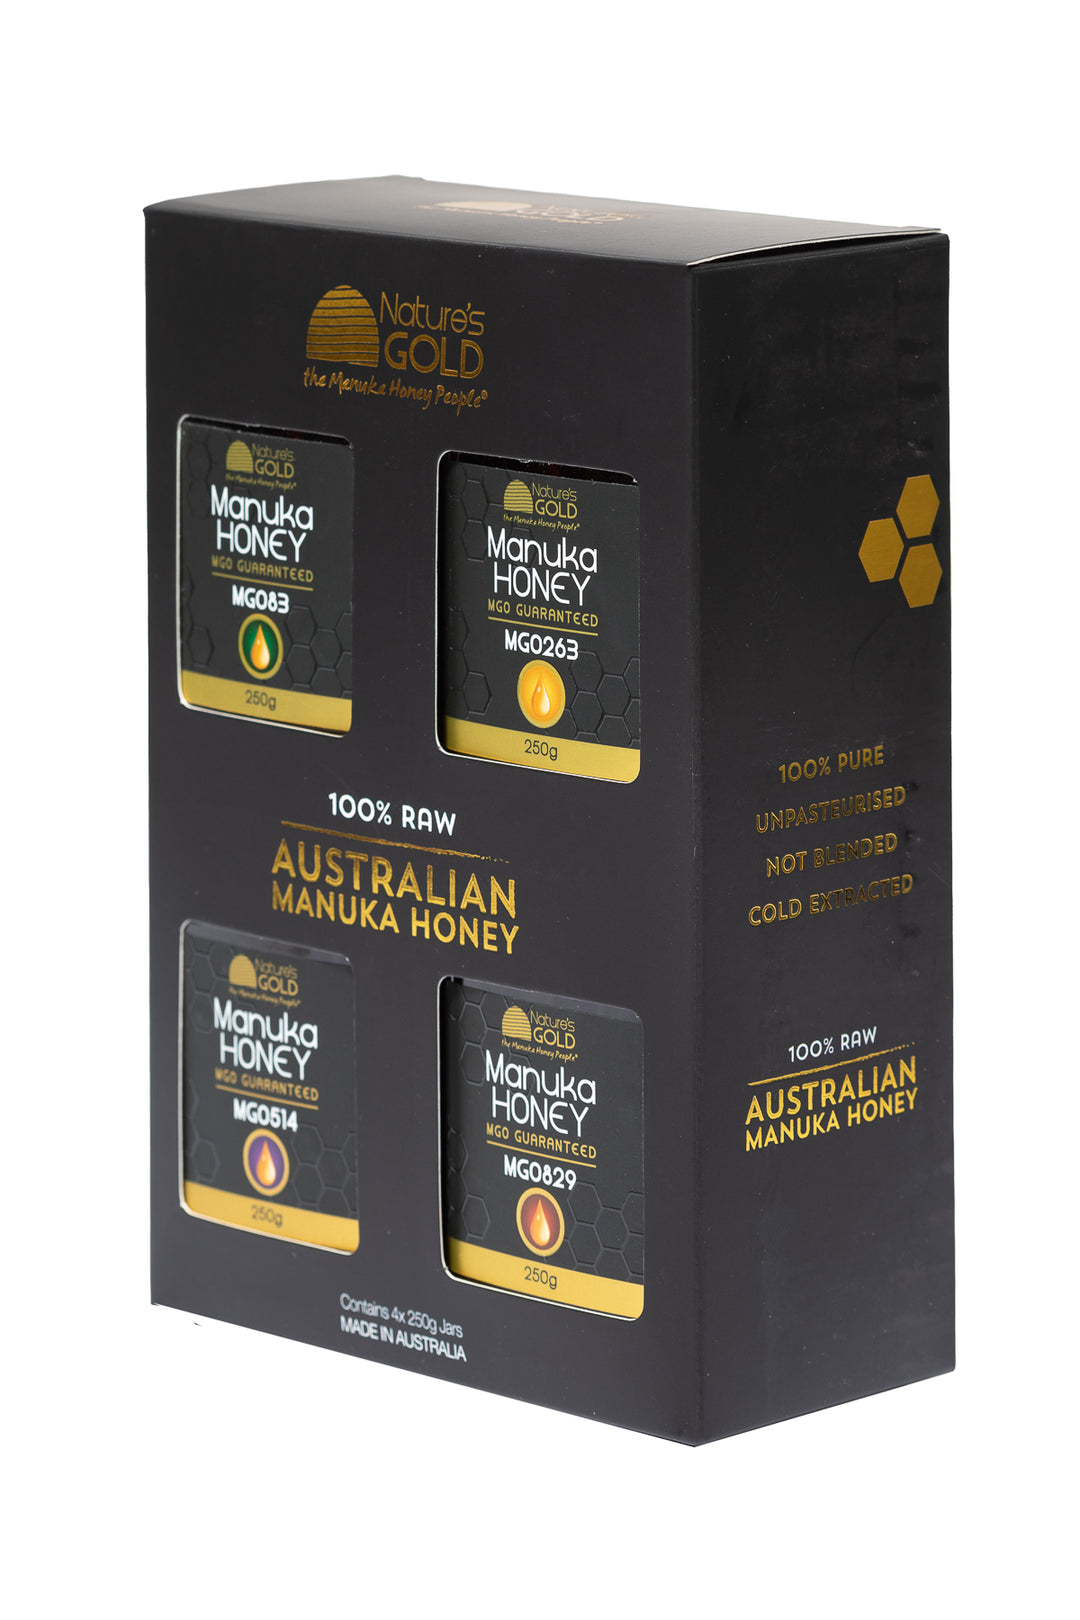 禮品包-Australian Manuka Honey X MGO 83、263、514和829